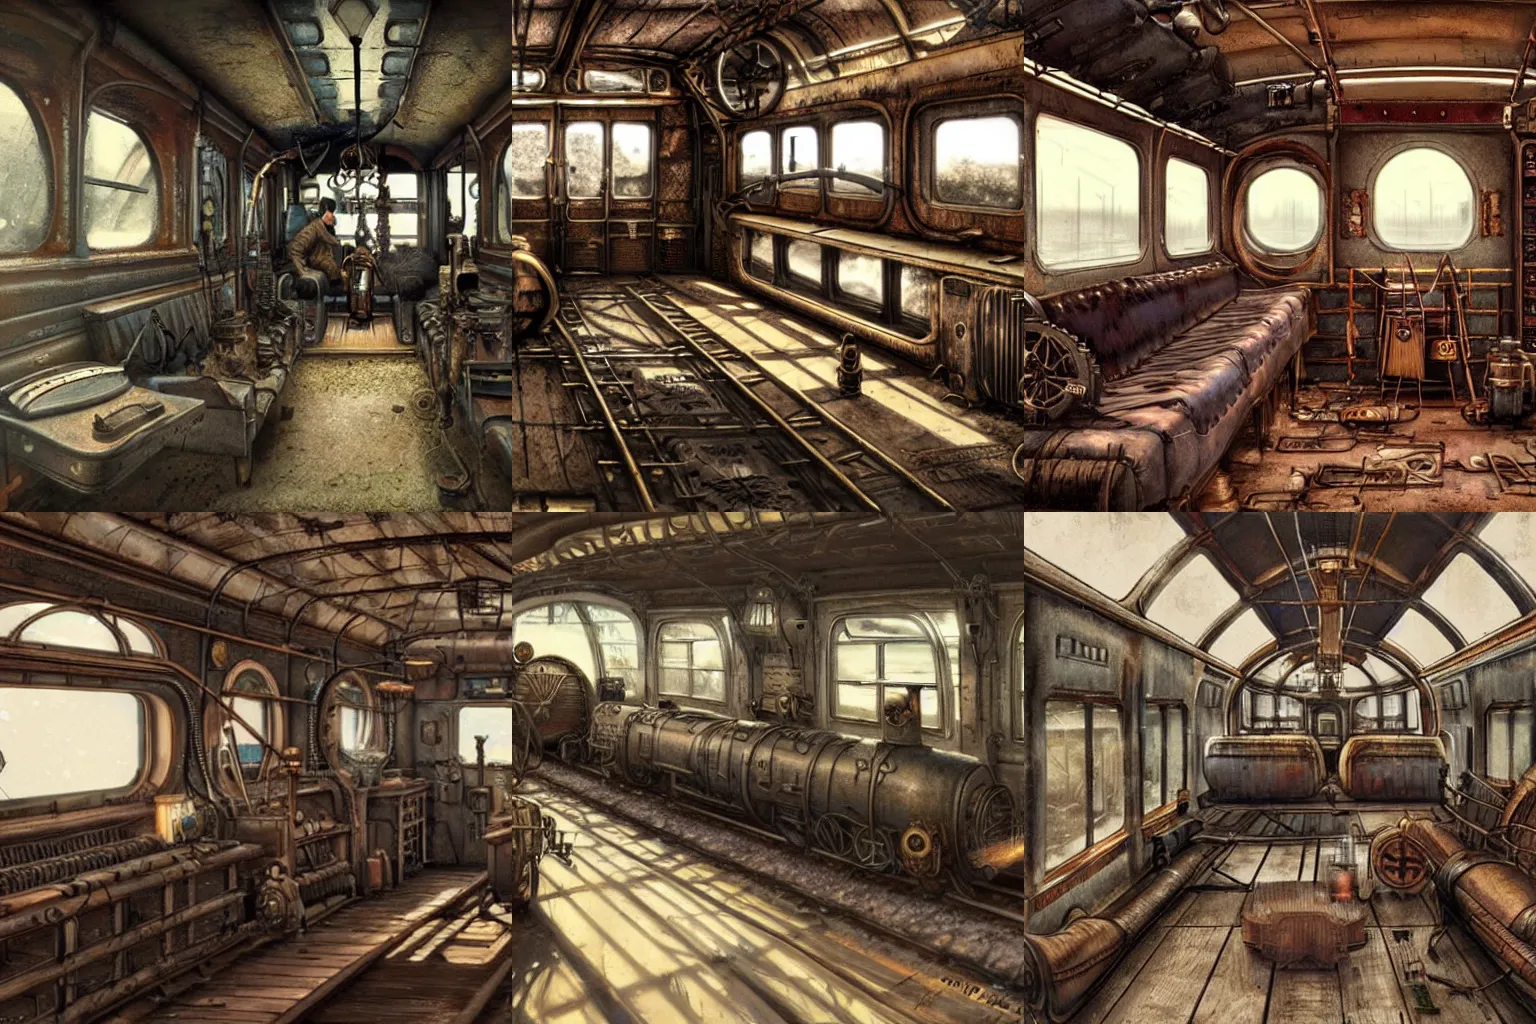 Prompt: steampunk train wagon interior, 3d scene, Greg Rutkowski, Enki Bilal, zenith view